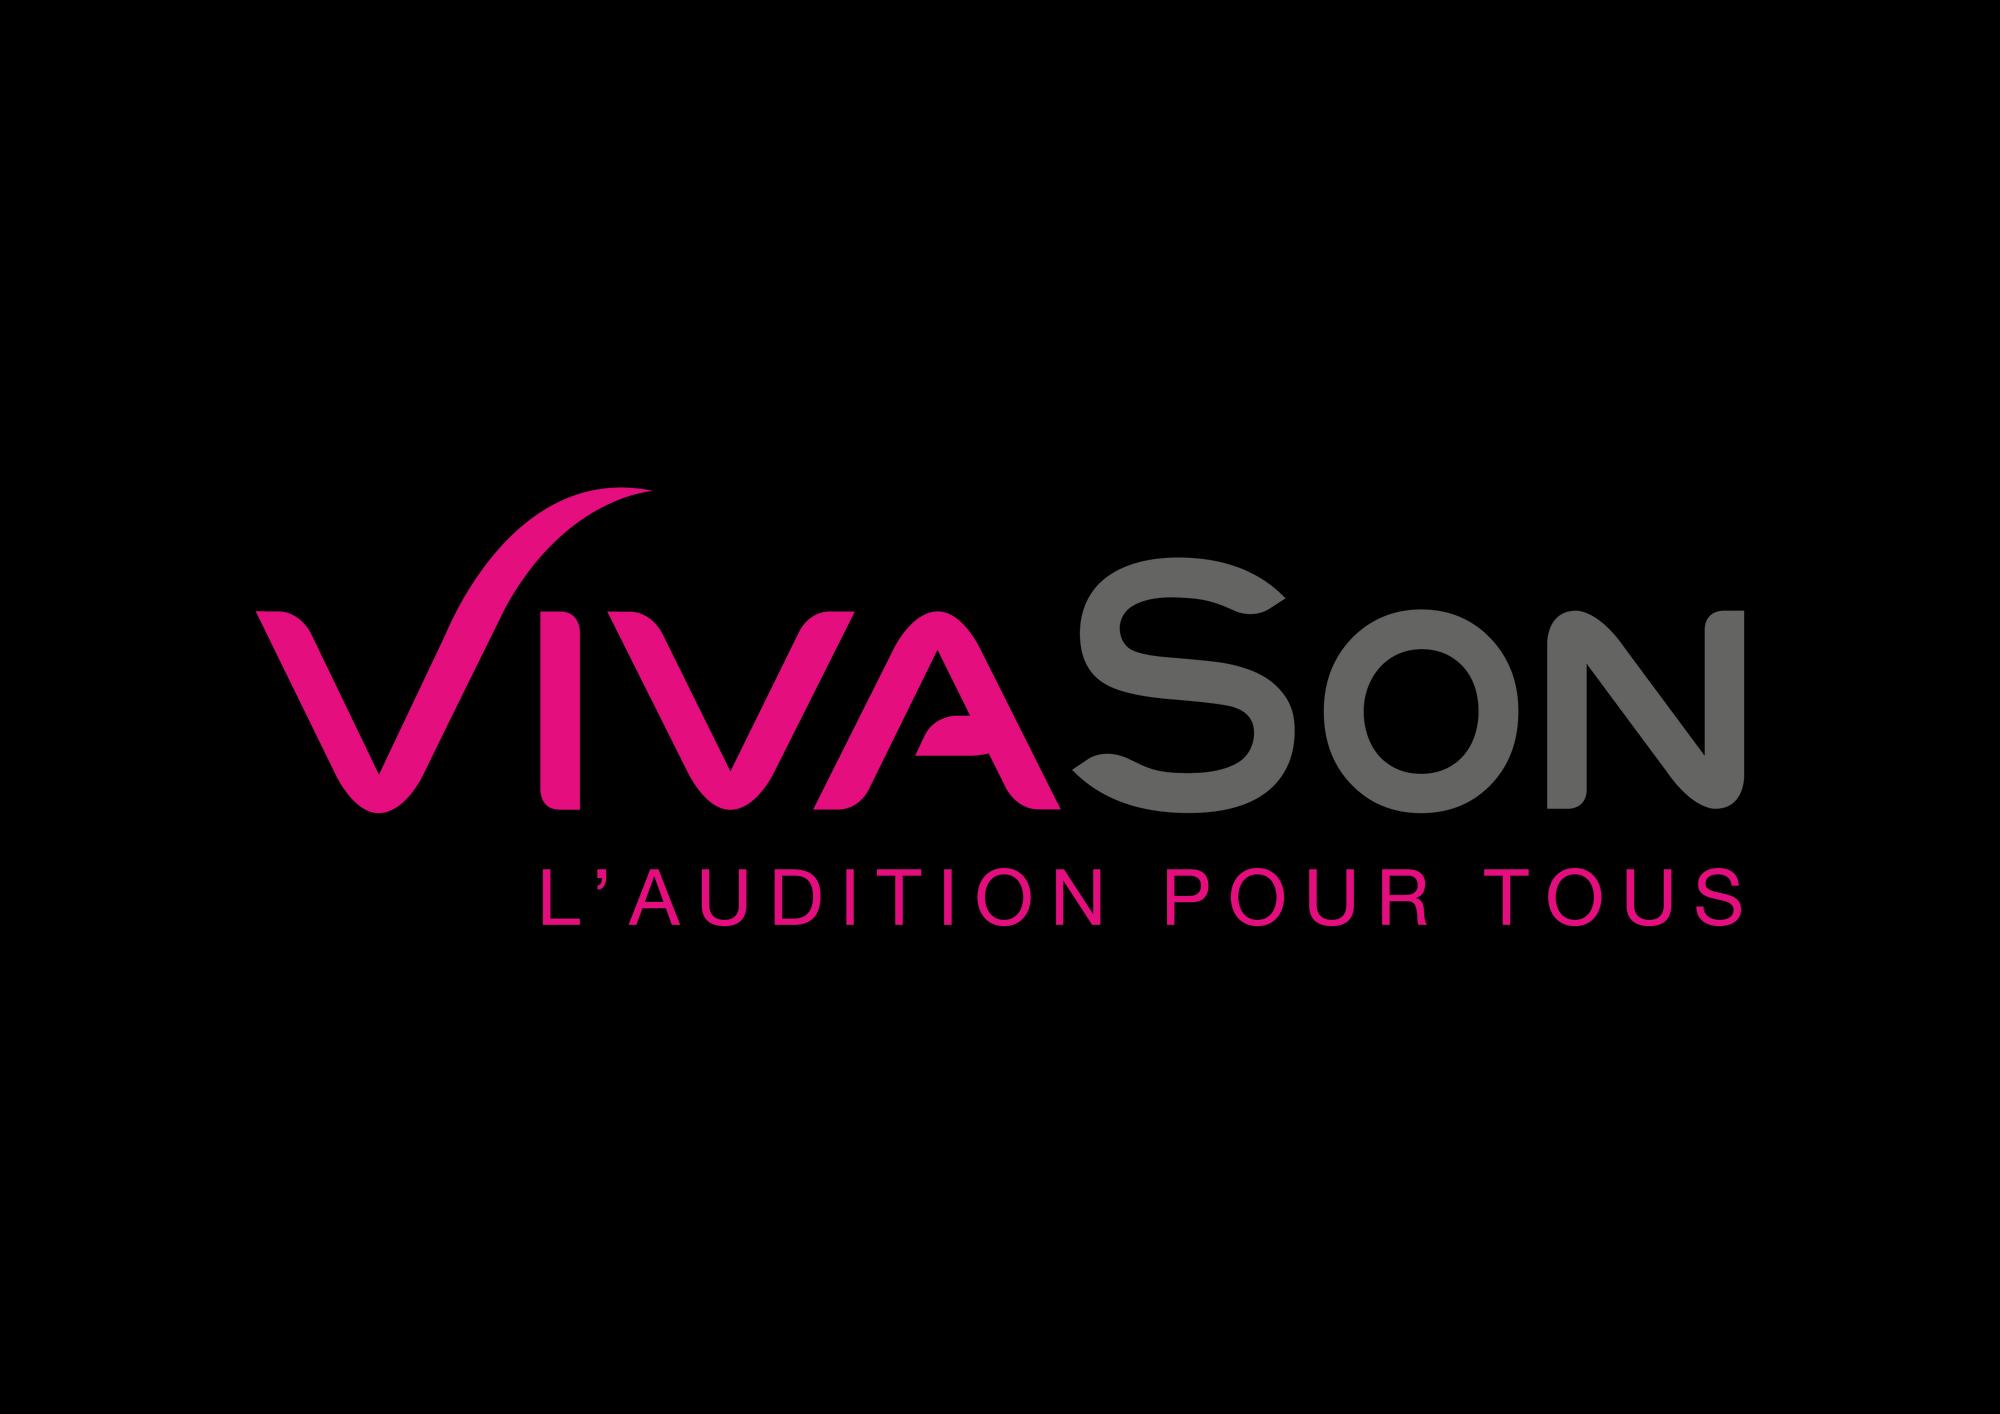 Vivason Toulon